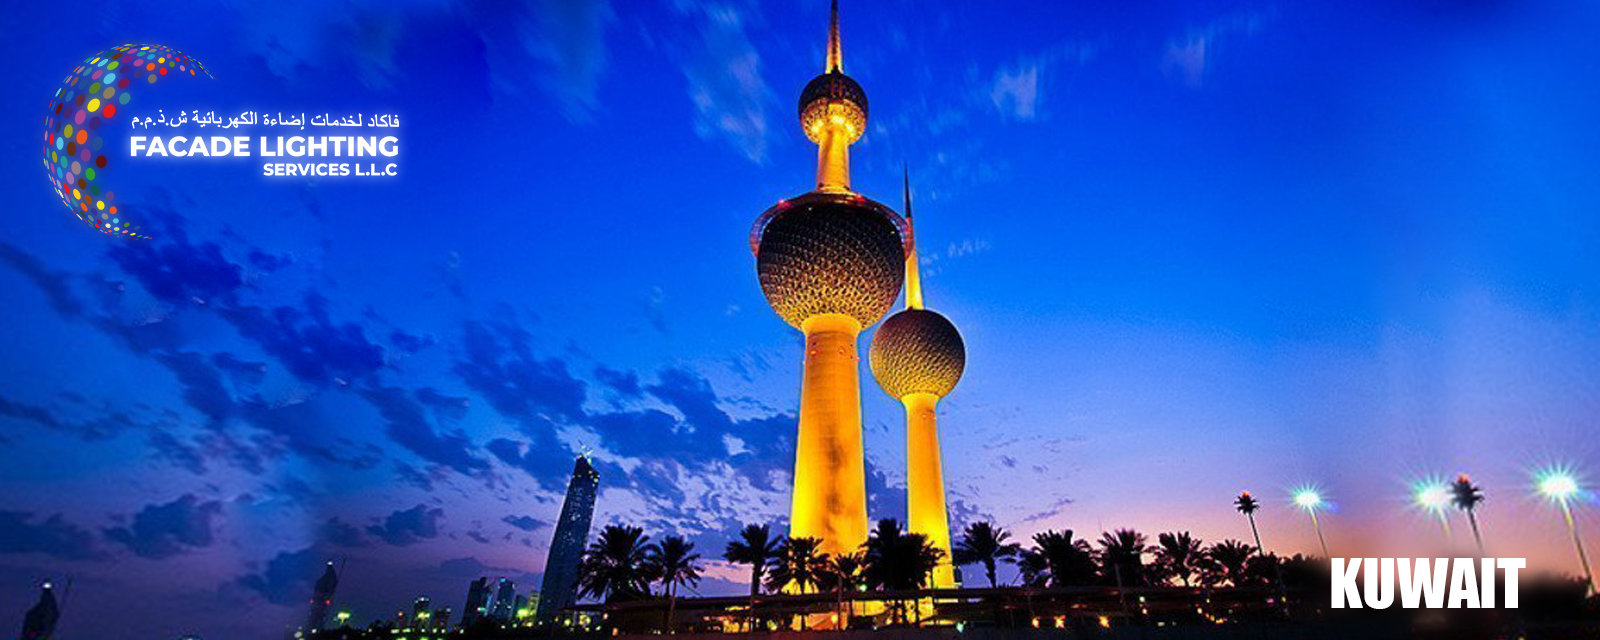 kuwait facade lighting